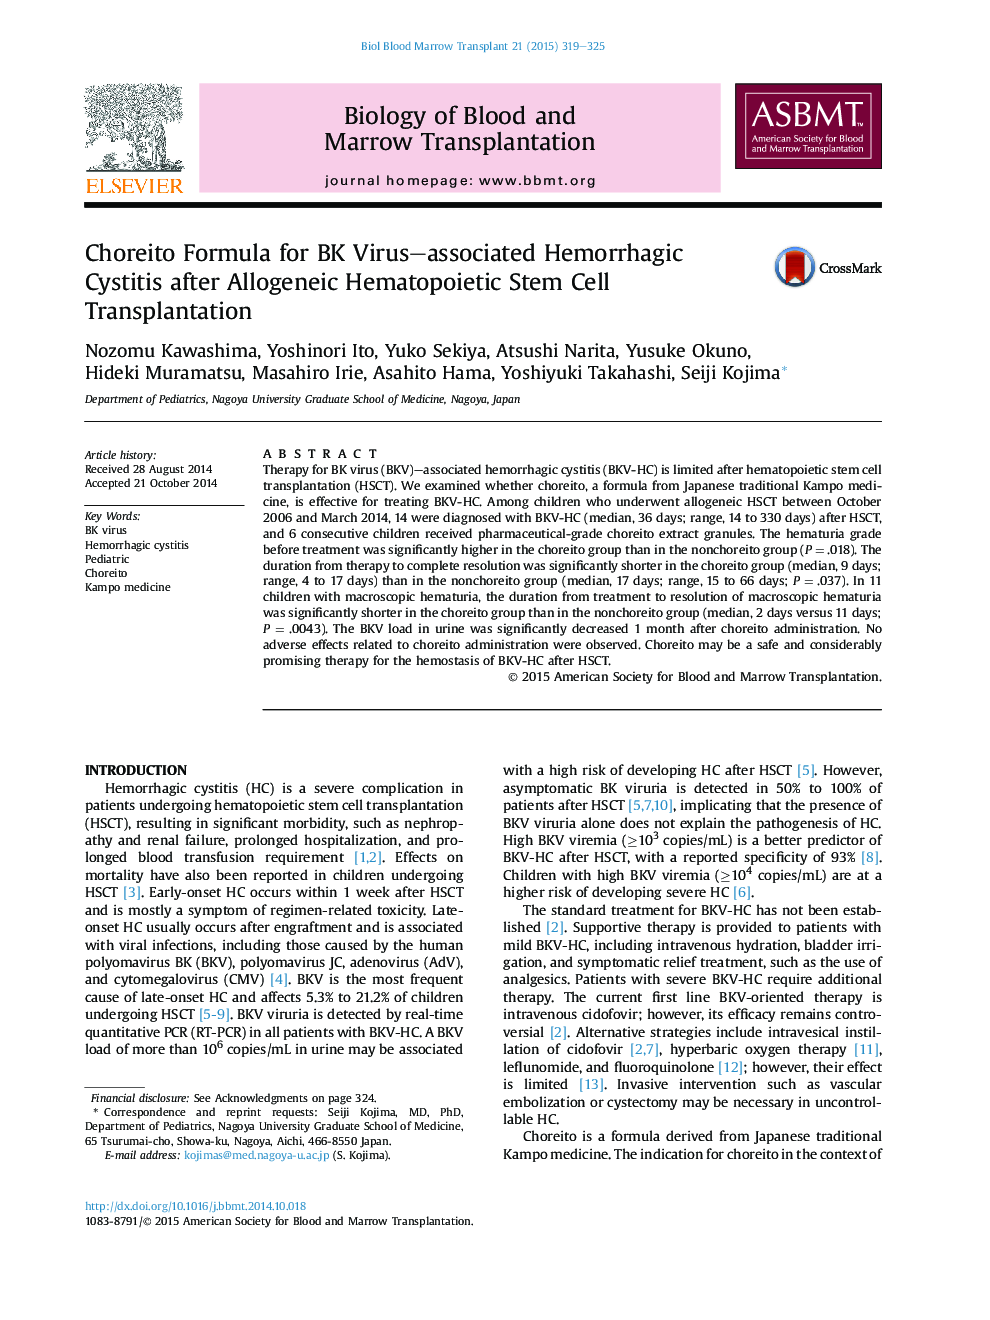 Choreito Formula for BK Virus–associated Hemorrhagic Cystitis after Allogeneic Hematopoietic Stem Cell Transplantation 